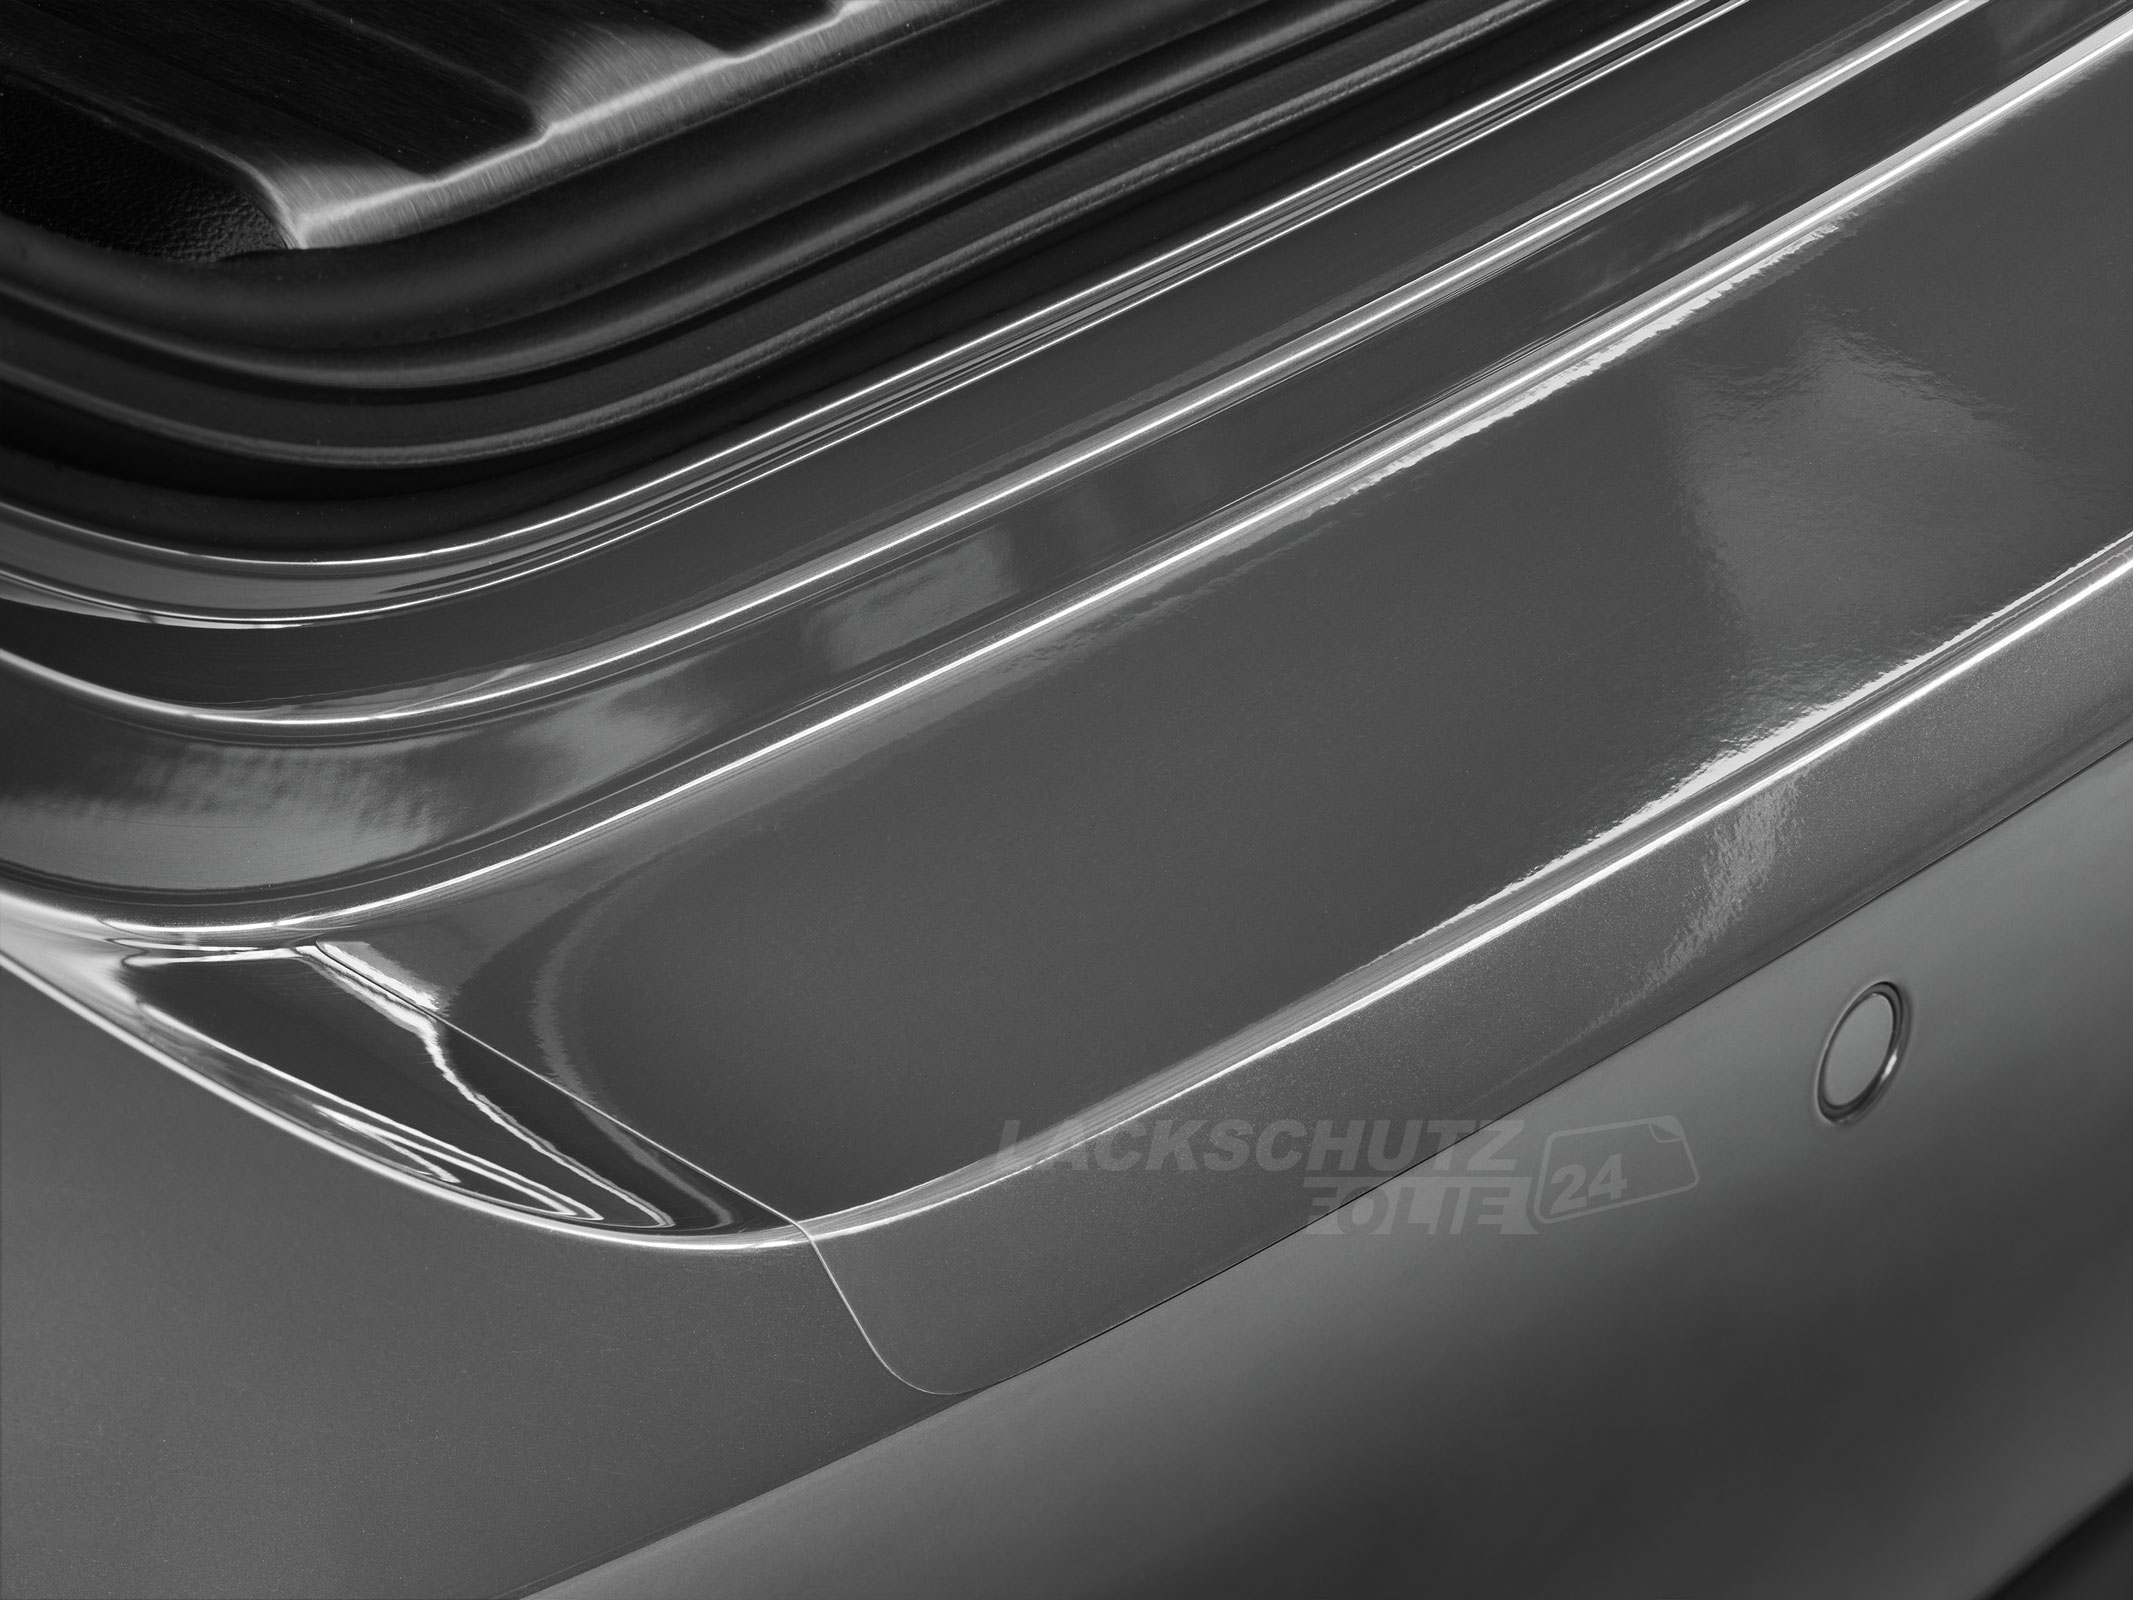 Ladekantenschutzfolie - Transparent Glatt Hochglänzend 150 µm stark für Toyota Avensis Touring Sports (Kombi) Typ T25, BJ 2003-2008